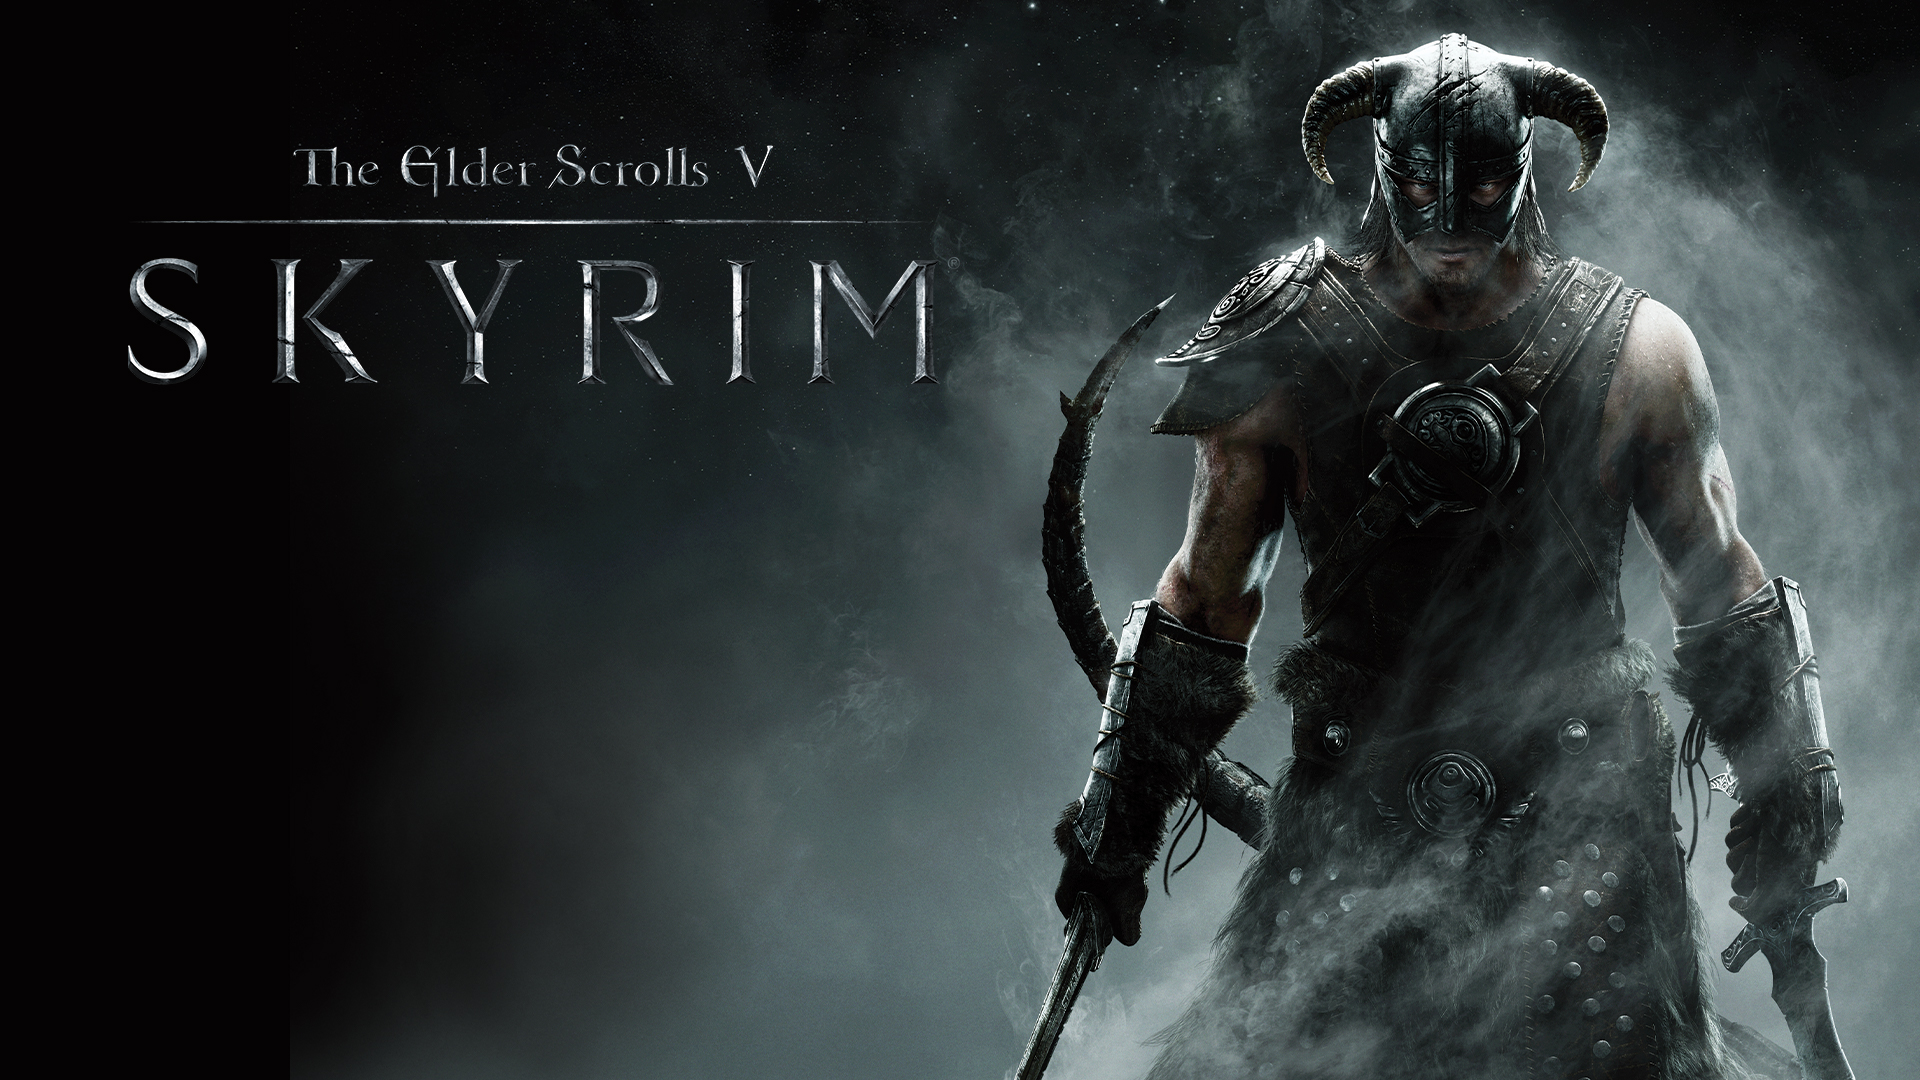 The Elder Scrolls V Skyrim 言語パック フランス語 Nintendo Switchソフト 任天堂